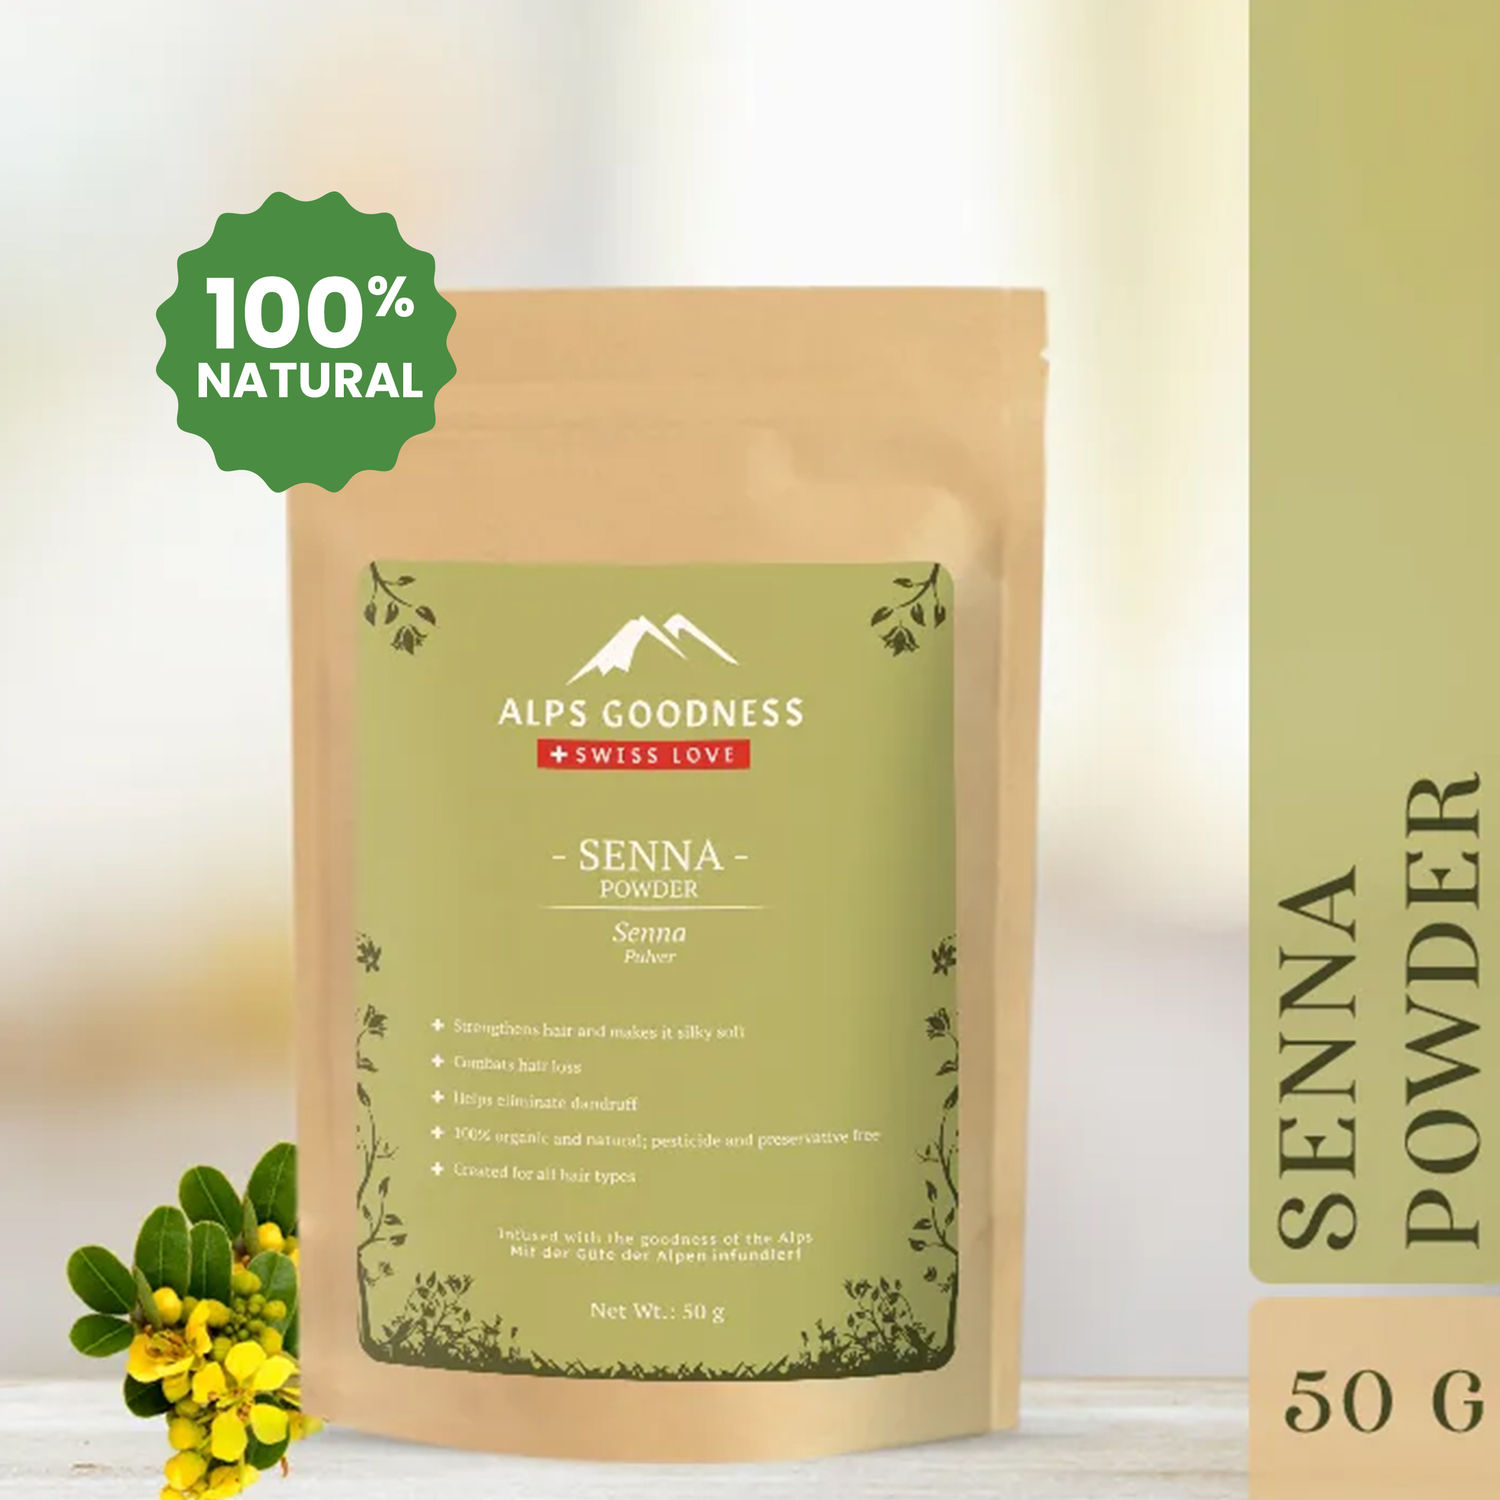 Buy Alps Goodness Powder - Senna (50 g) - Purplle